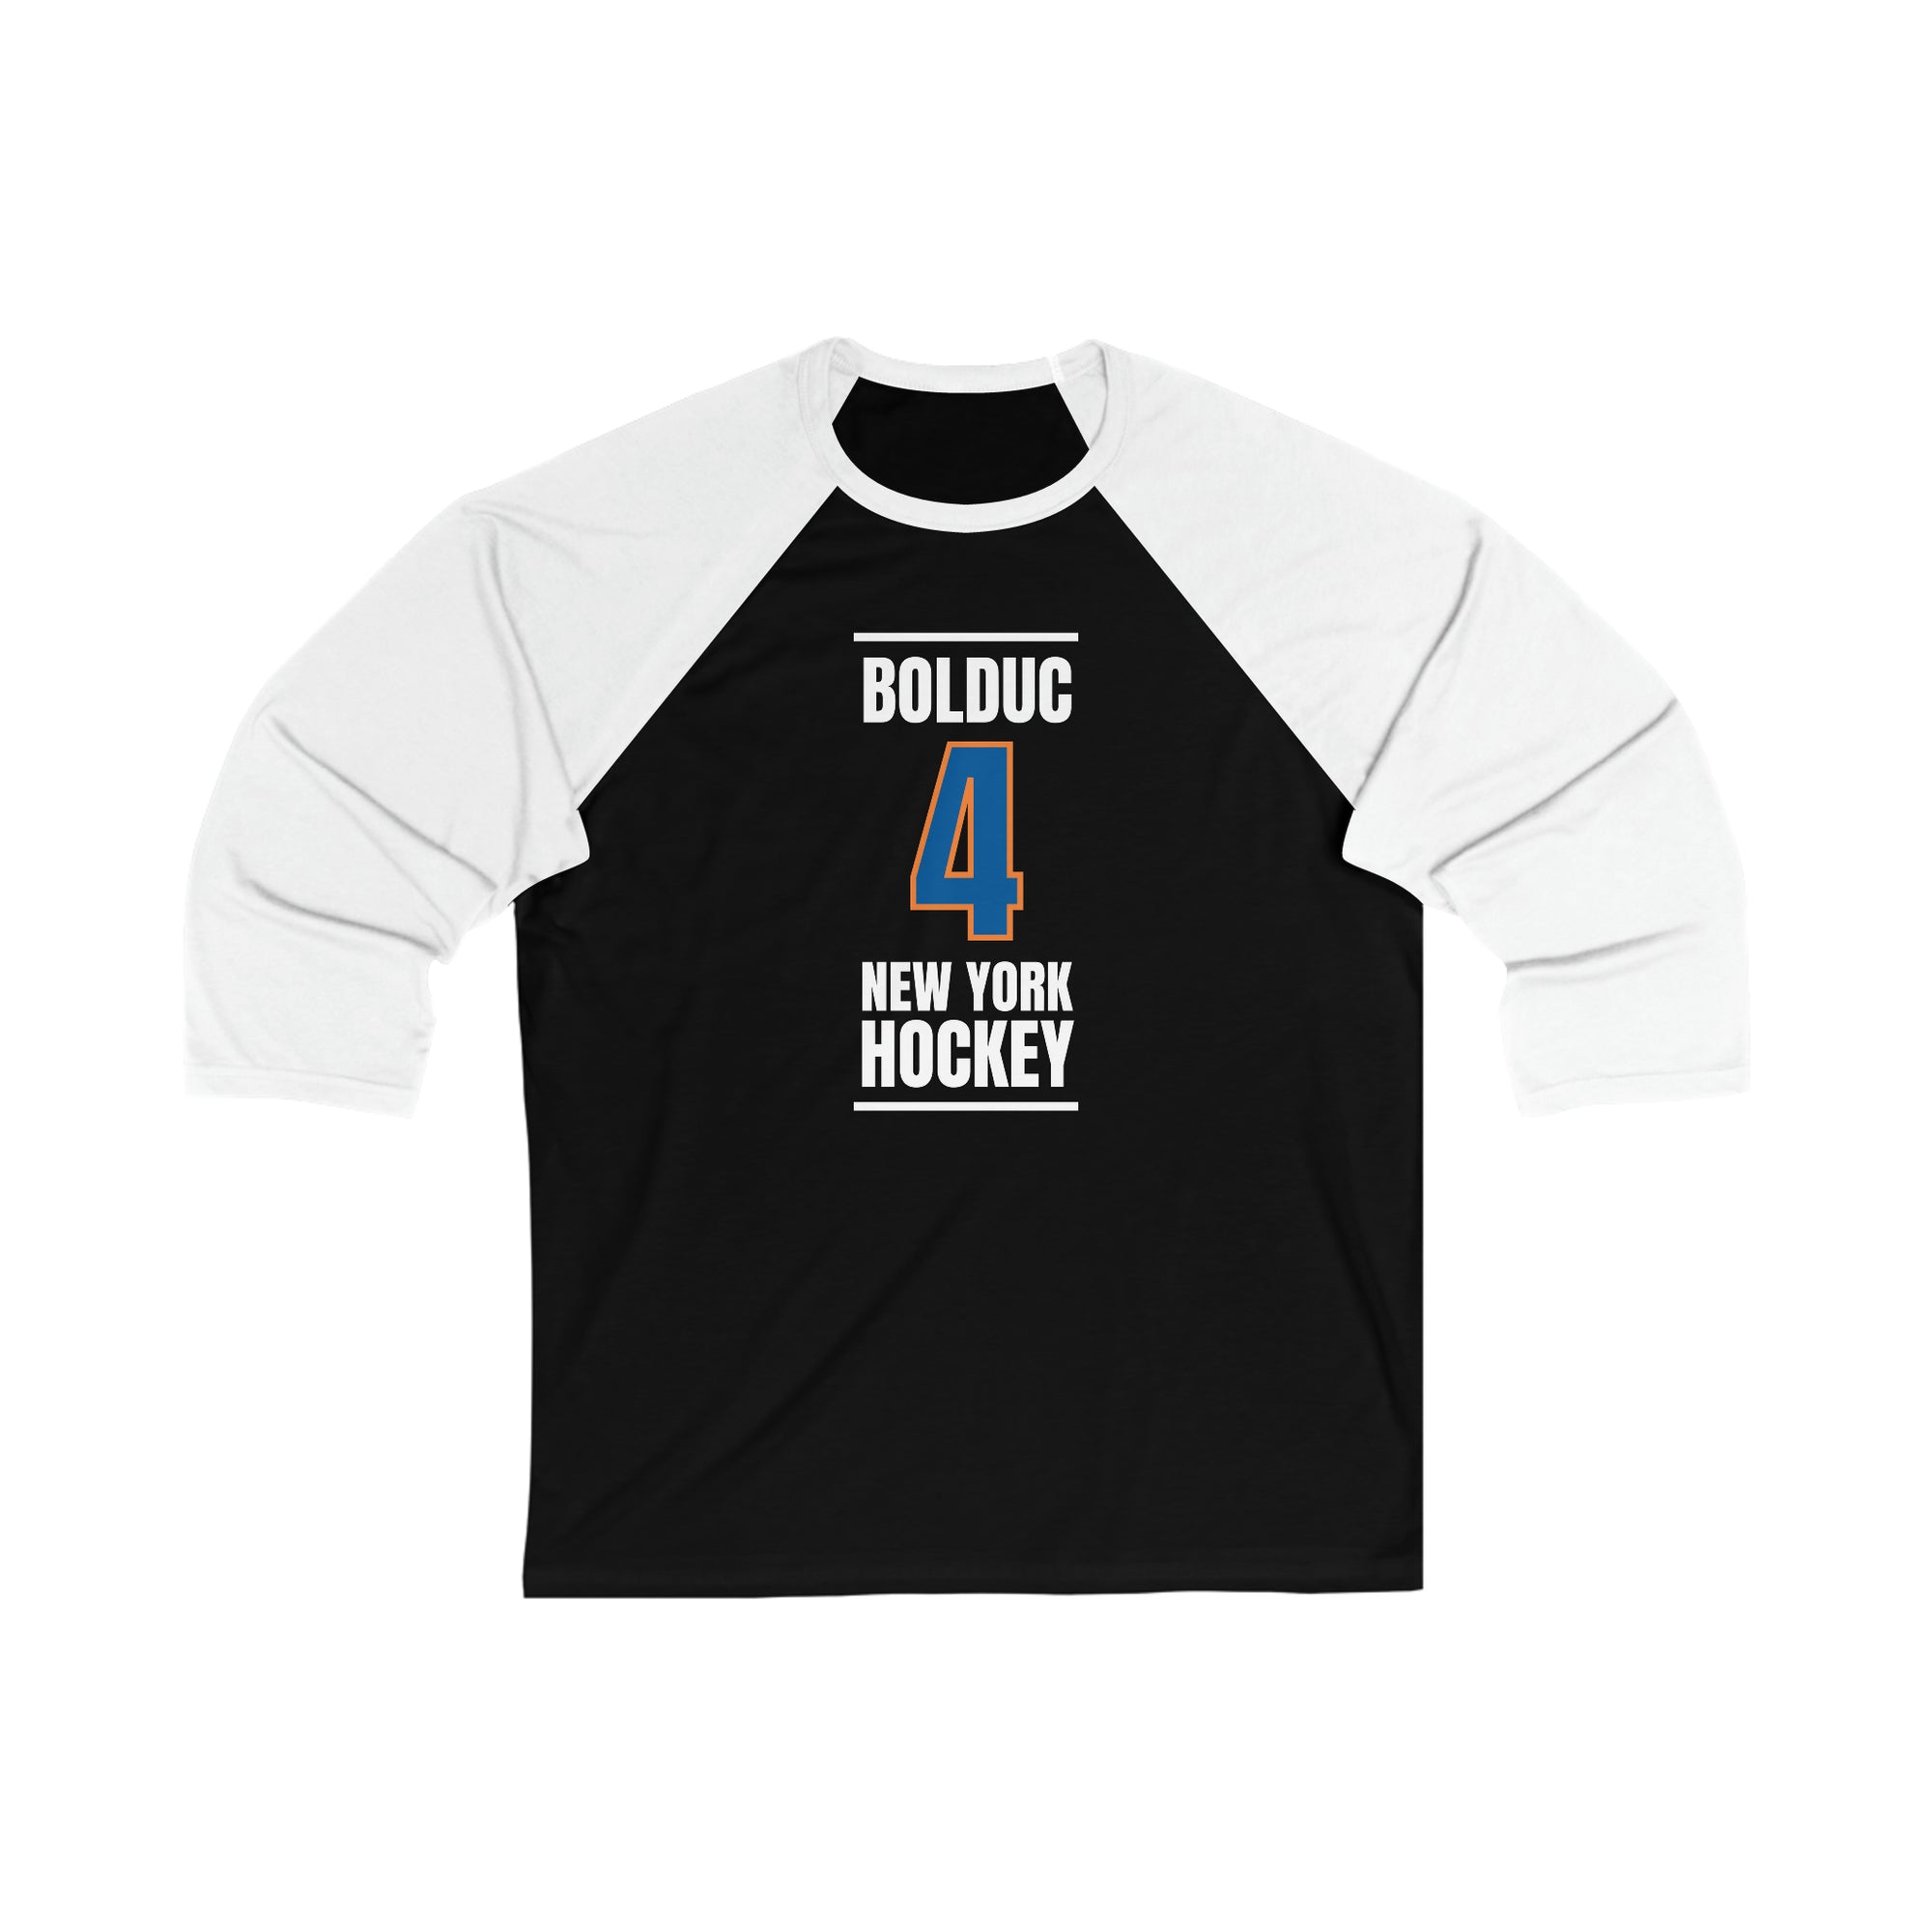 Bolduc 4 New York Hockey Blue Vertical Design Unisex Tri-Blend 3/4 Sleeve Raglan Baseball Shirt